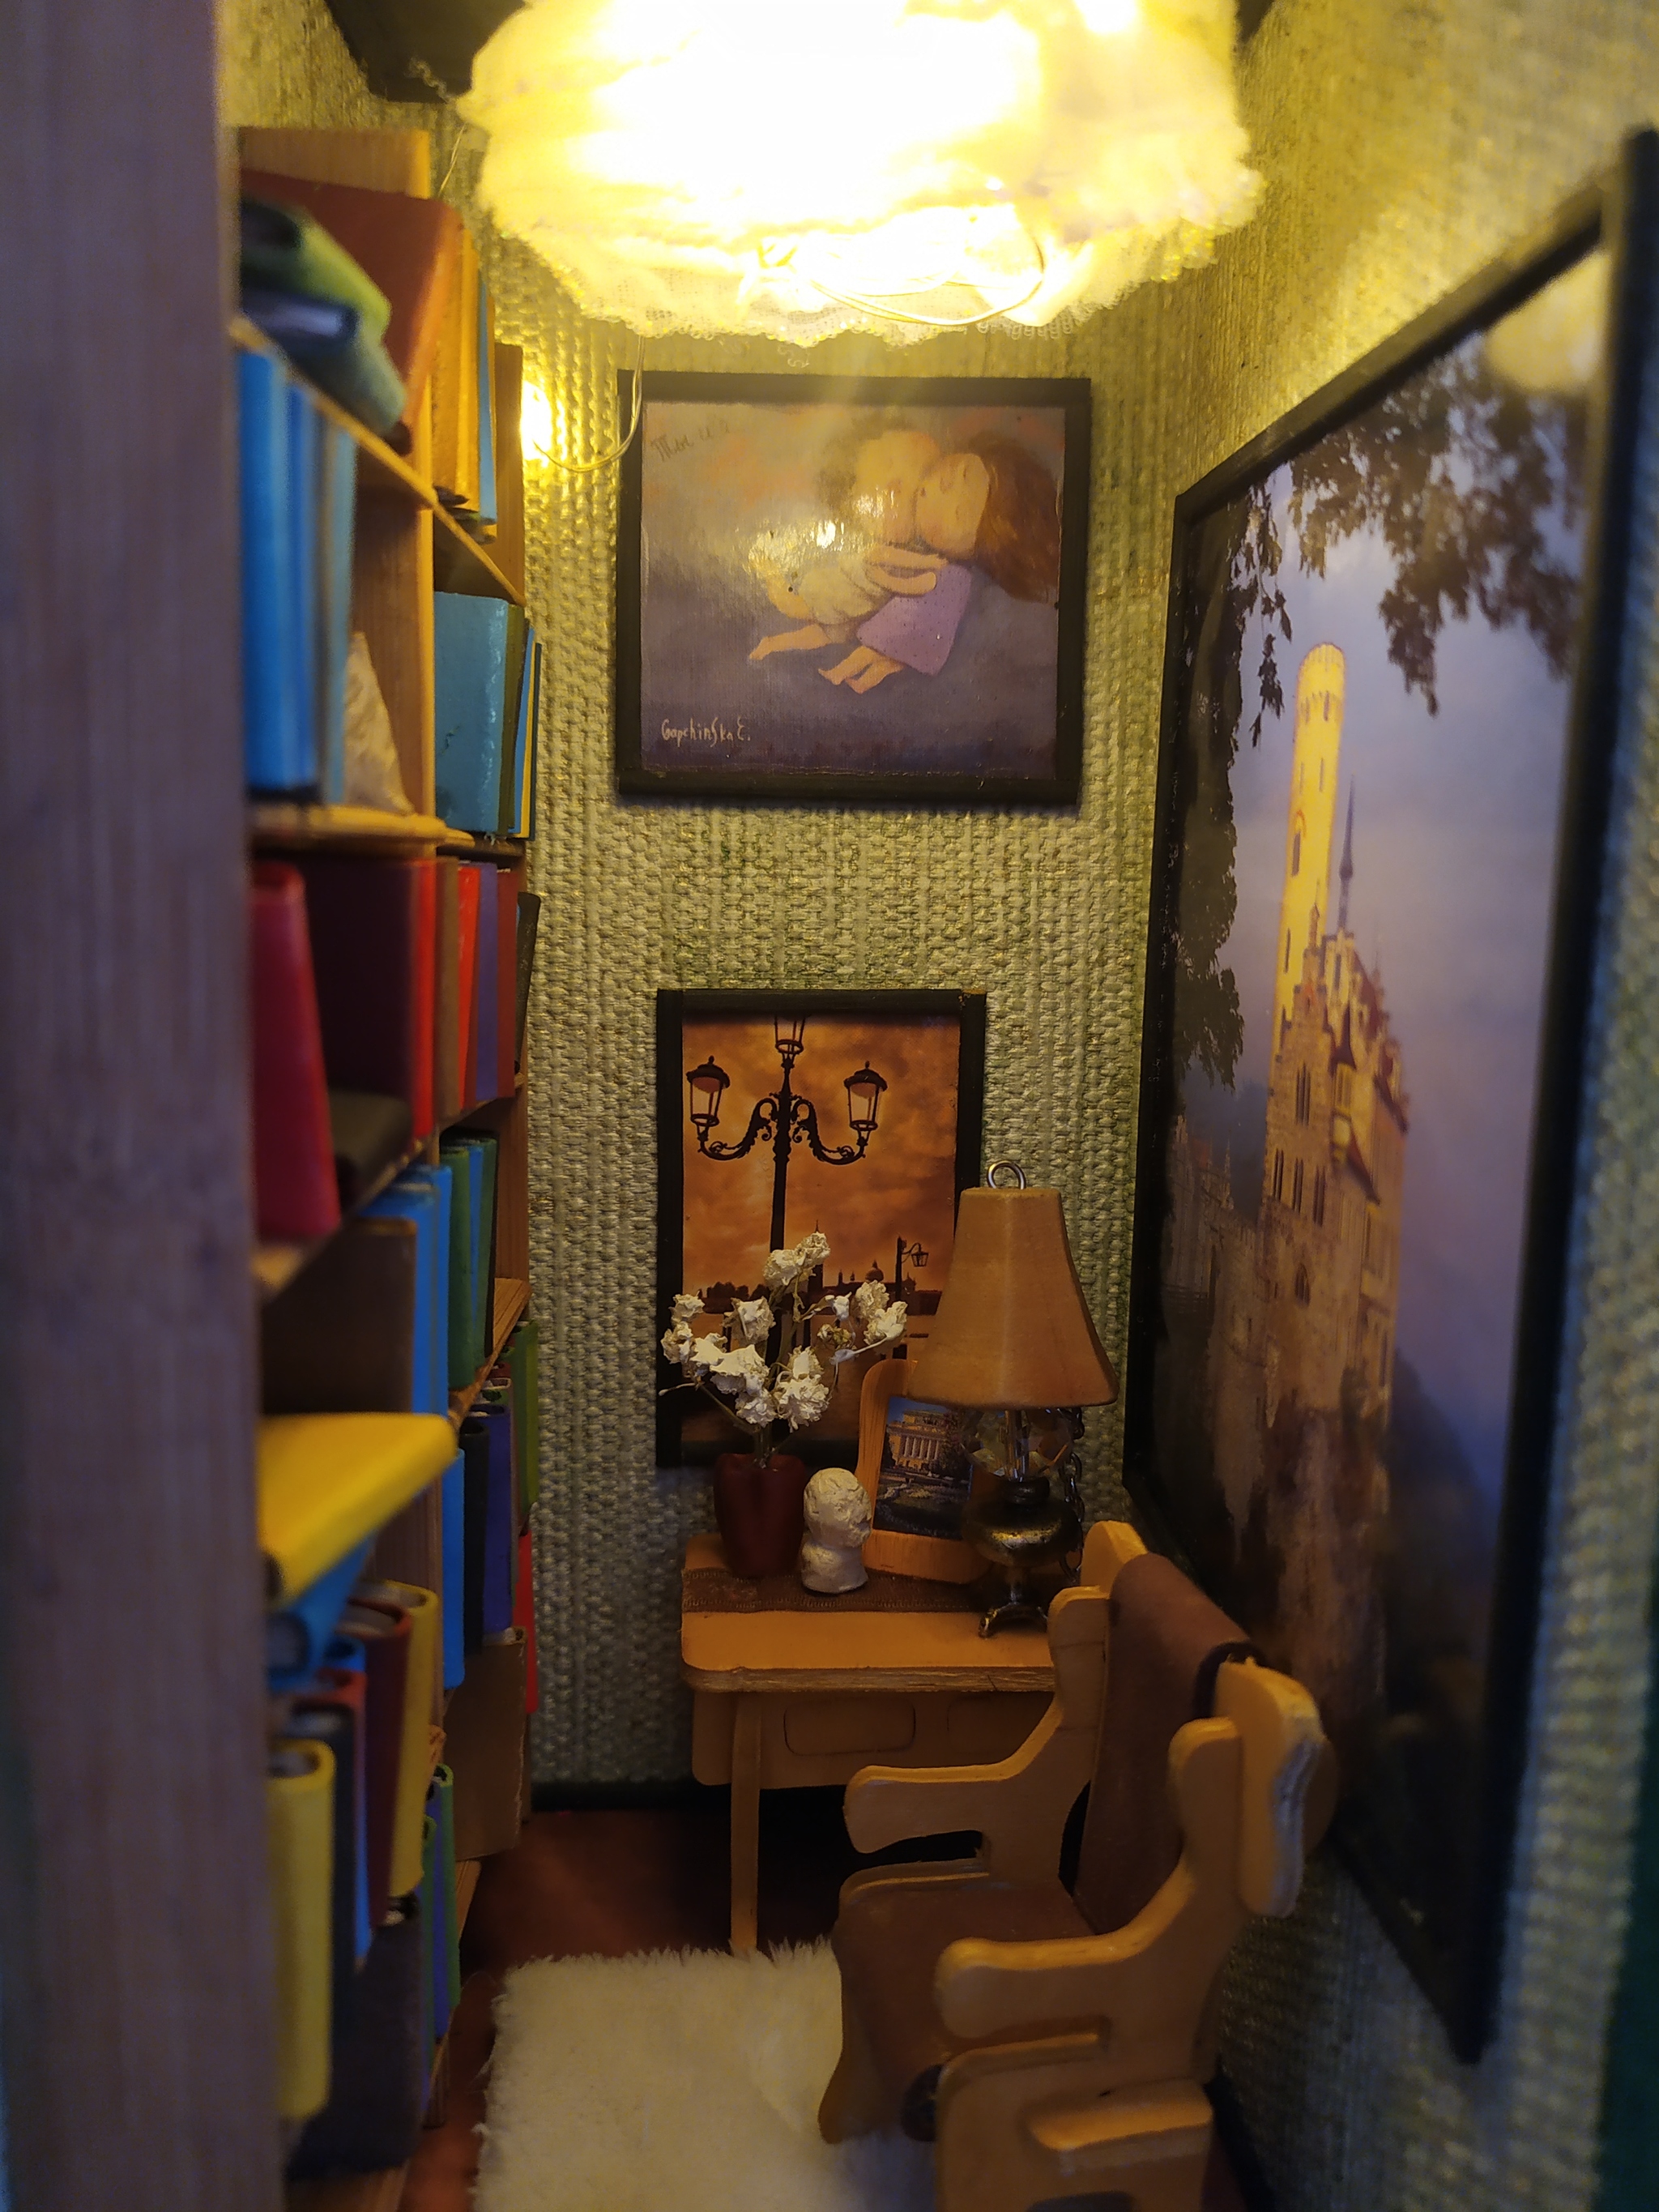 Bookshelf light - My, Lamp, Books, Library, Night, Cosiness, Self-isolation, Saint Petersburg, Longpost, Needlework without process